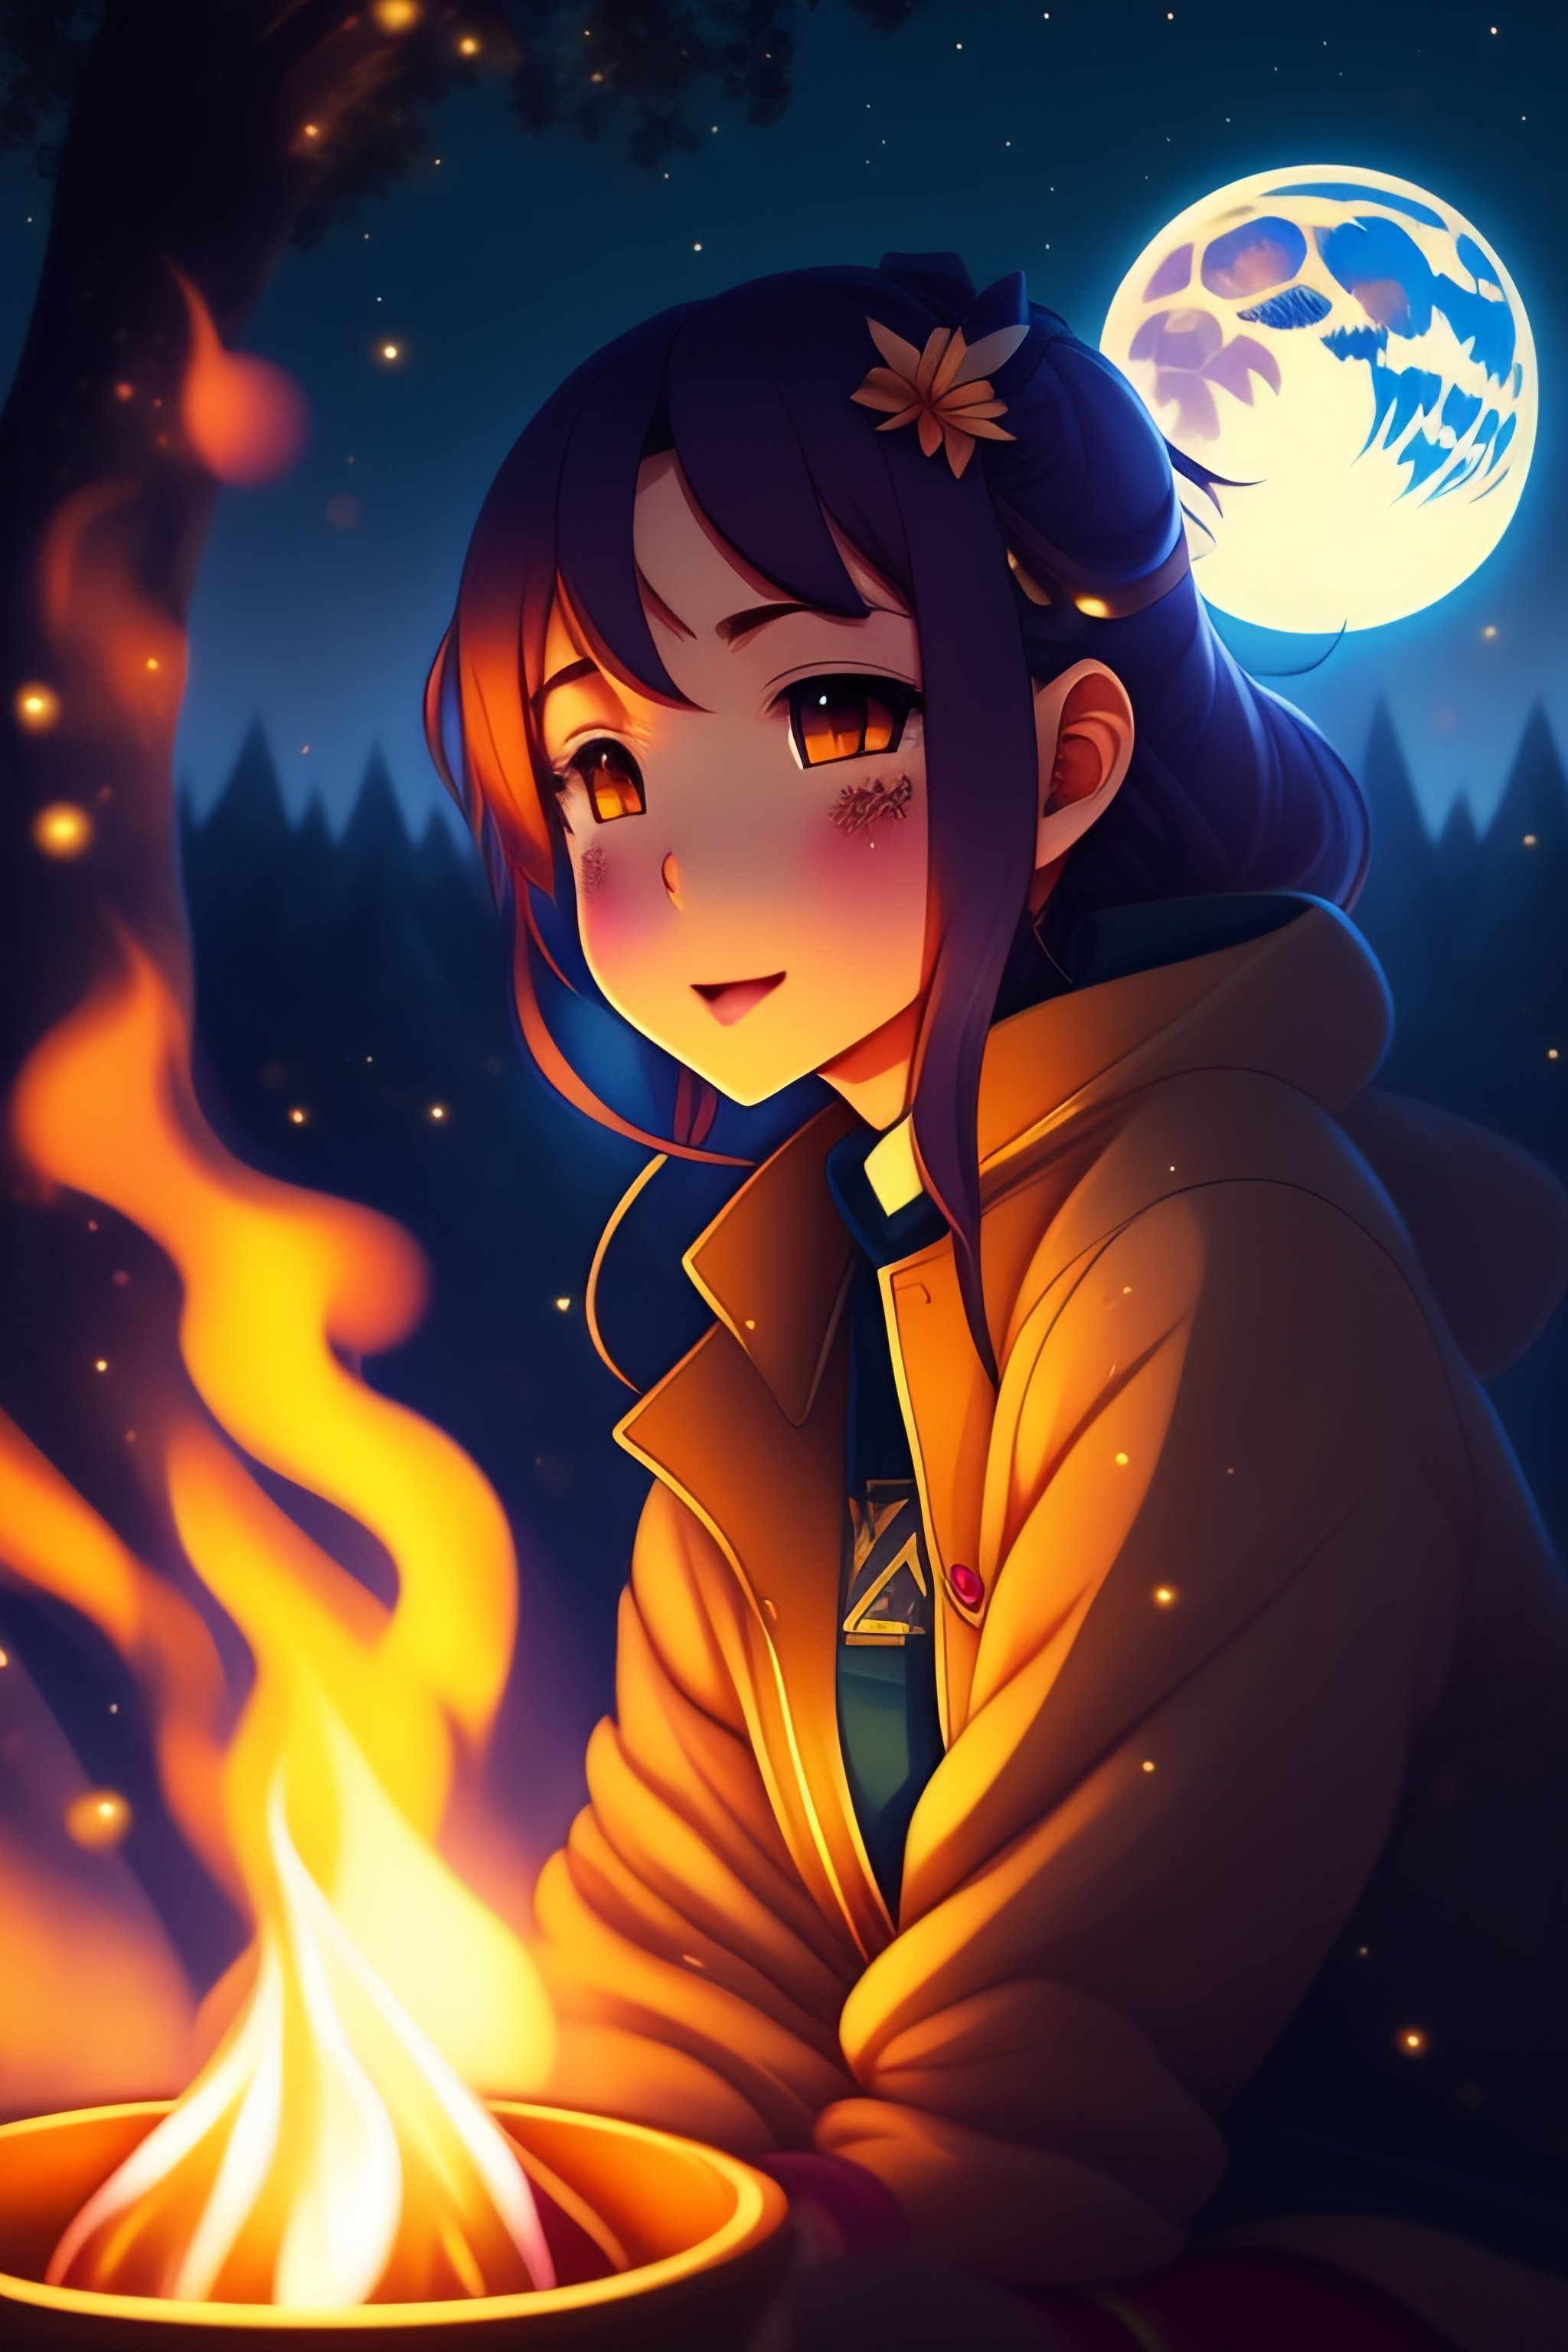 Girl Anime Steam Artwork by Poxaa on DeviantArt